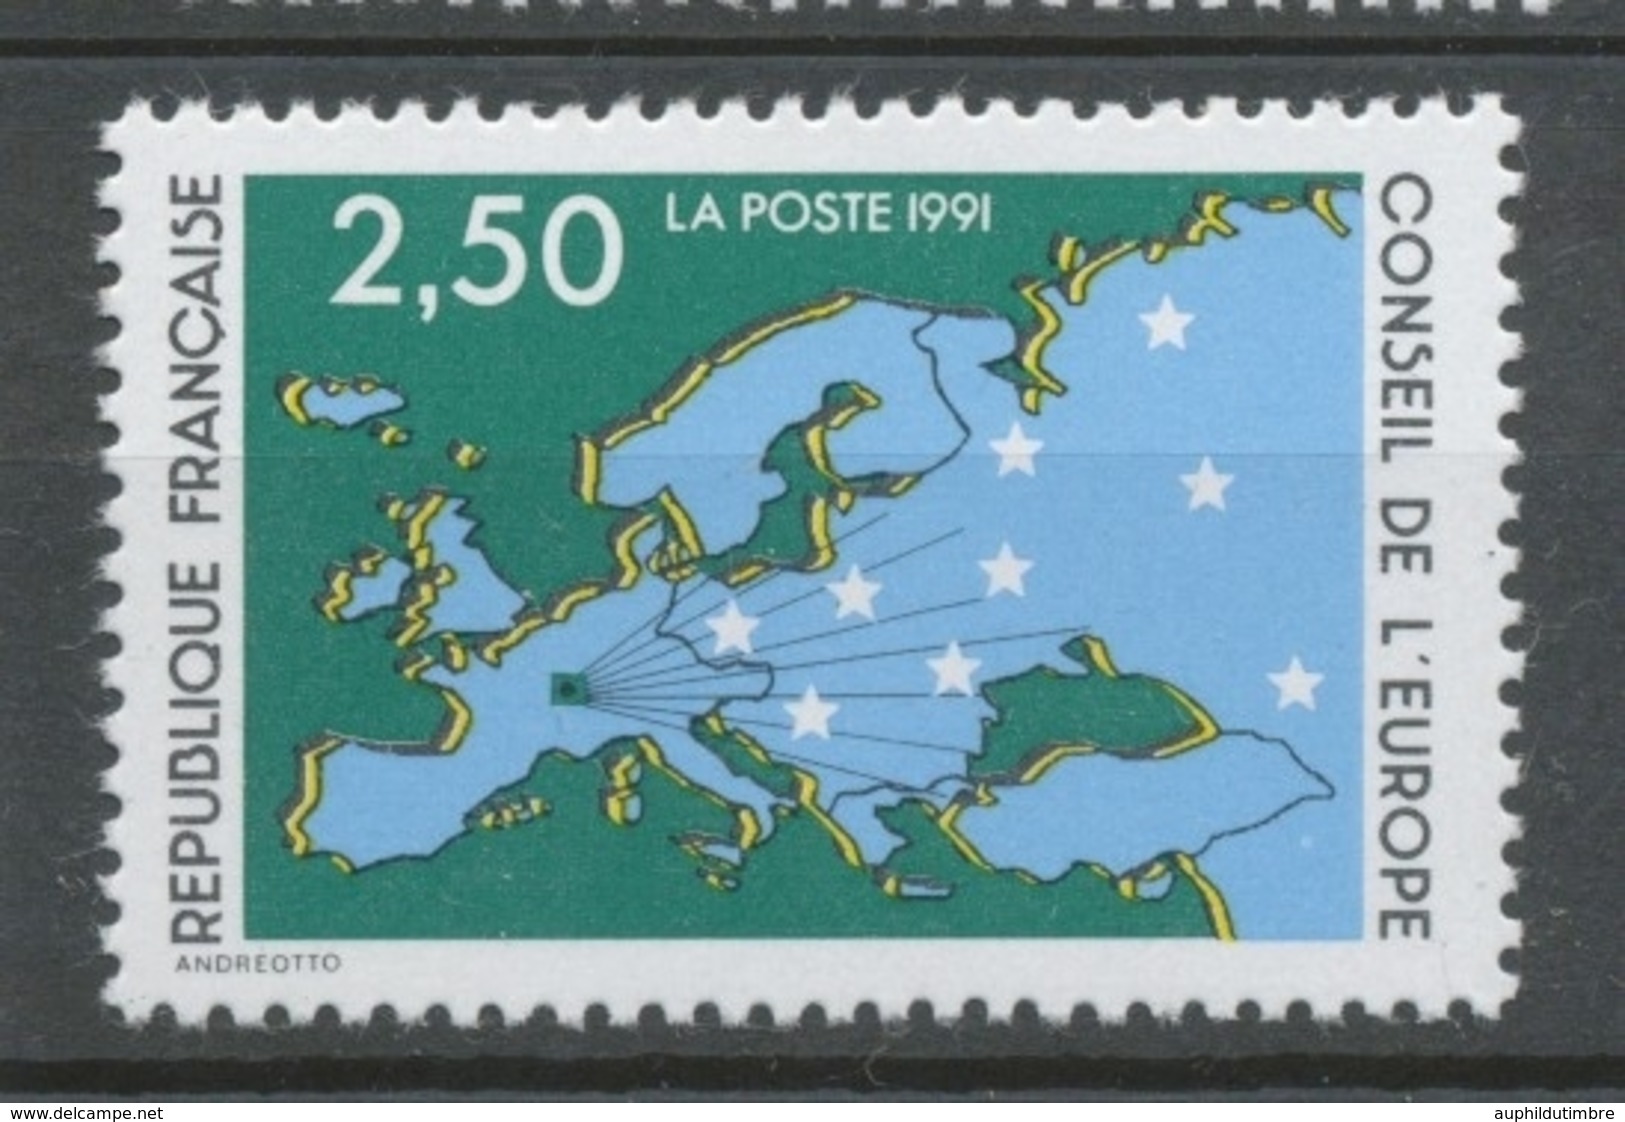 Service N°106 Conseil De L' Europe. 2f.50  Multicolore ZS106 - Neufs